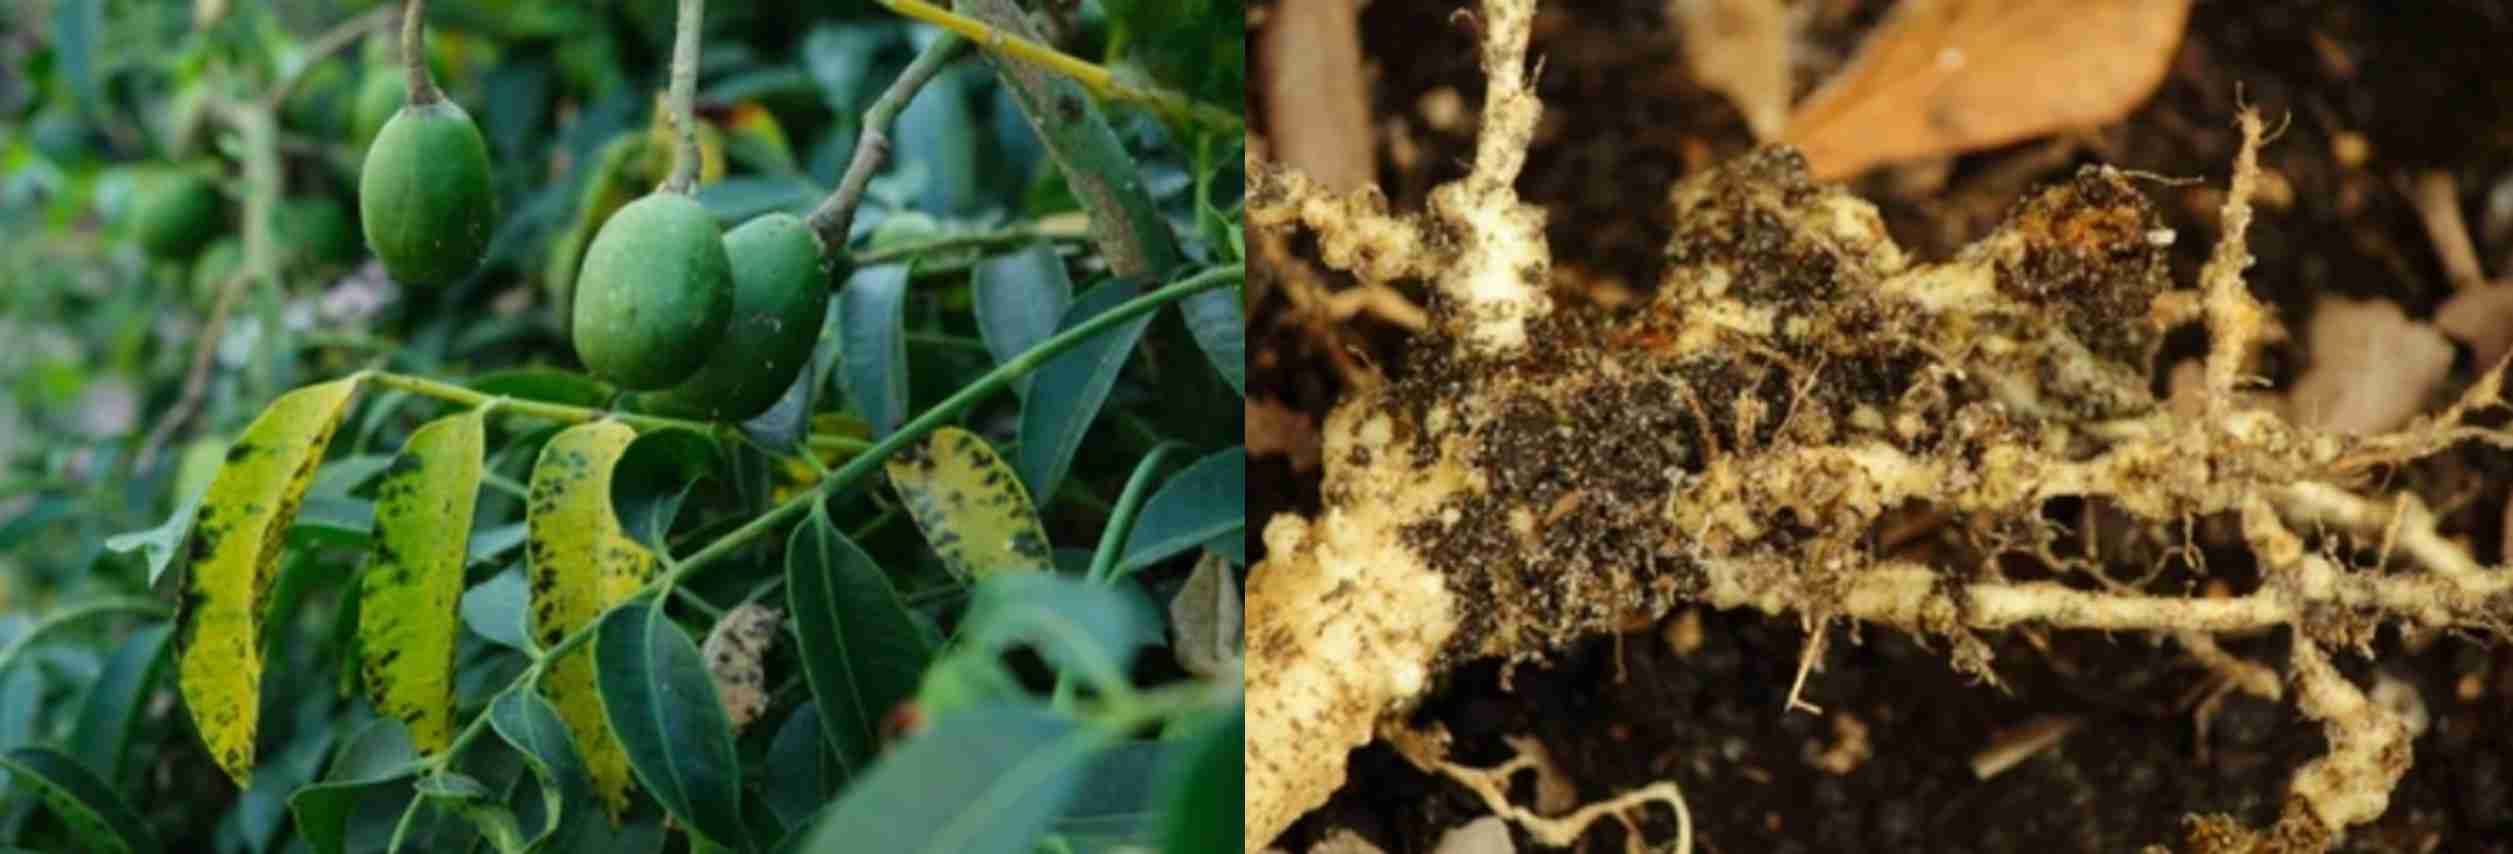 Aboveground (left) and underground (right) parts of fruit tree nematode diseases.